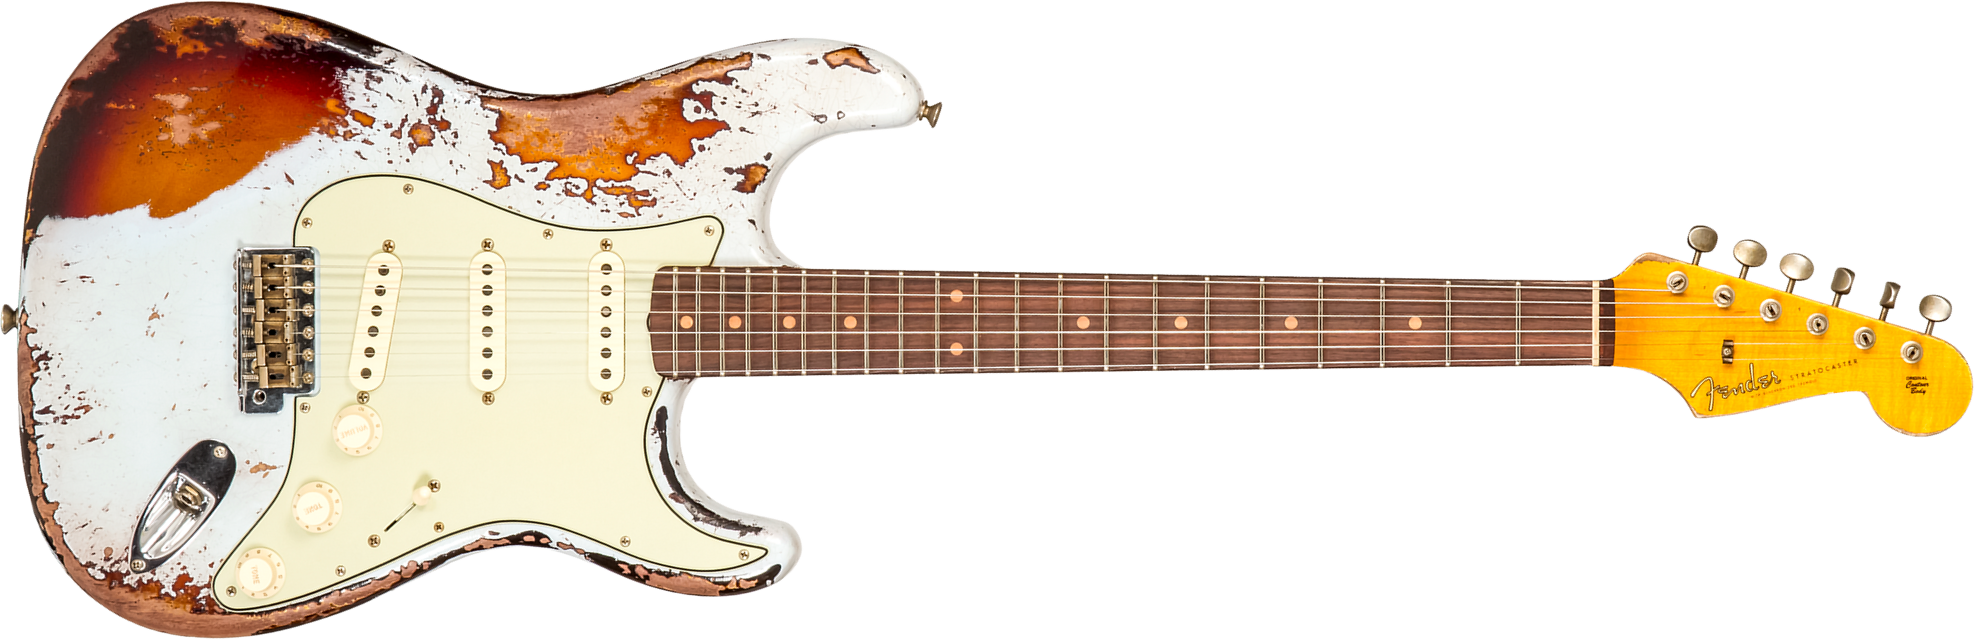 Fender Custom Shop Strat 1959 3s Trem Rw #cz576124 - Super Heavy Relic Sonic Blue O. Chocolate Sunburst - E-Gitarre in Str-Form - Main picture